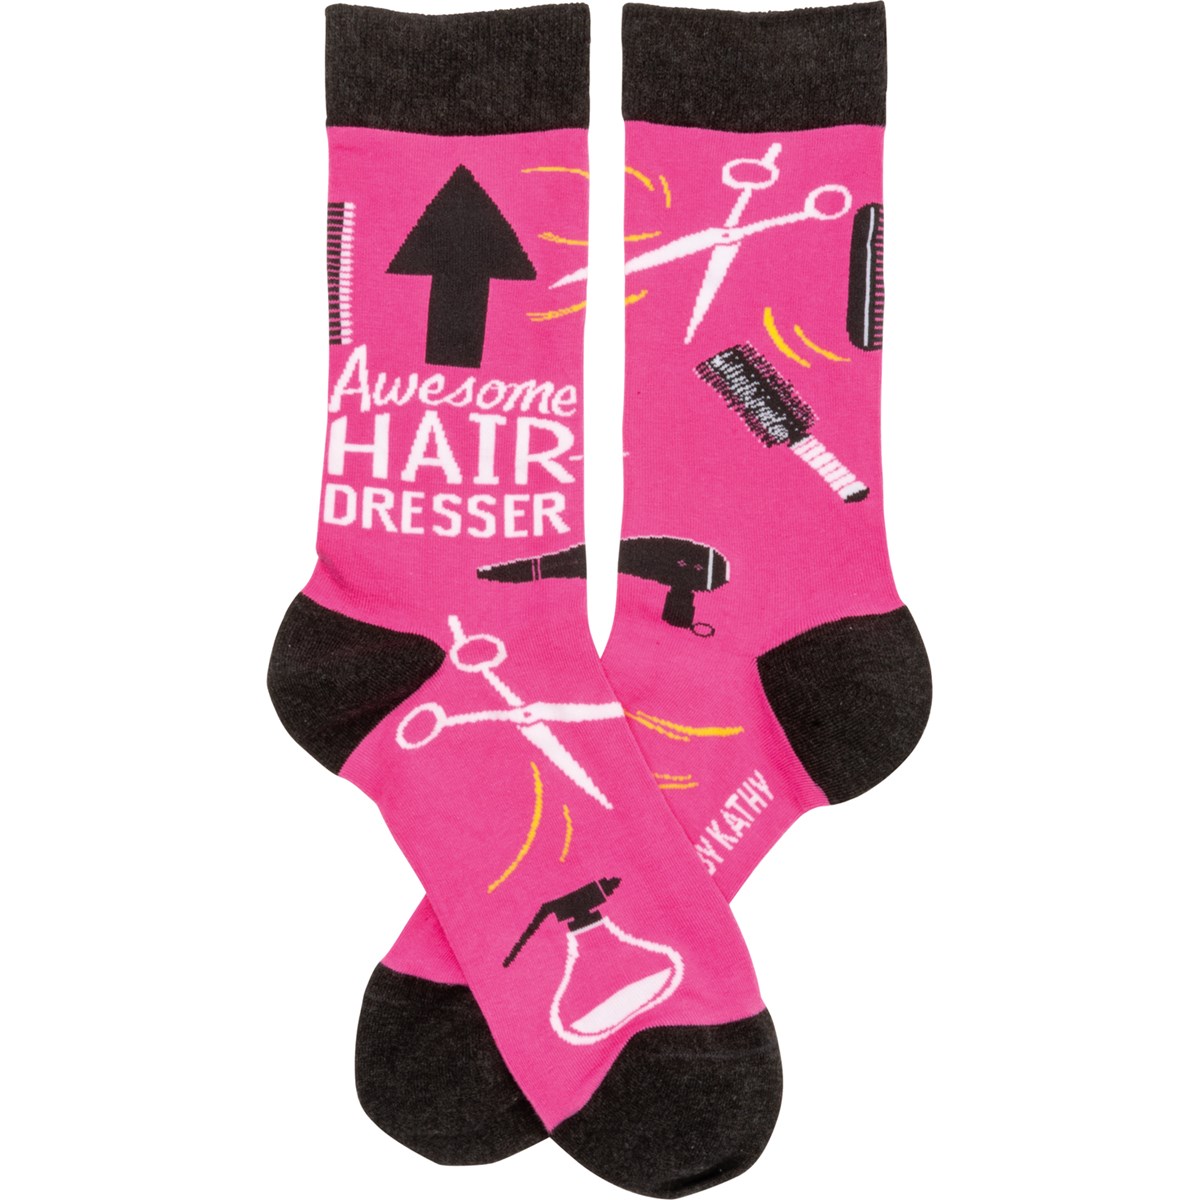 Awesome Hairdresser Socks - Cotton, Nylon, Spandex